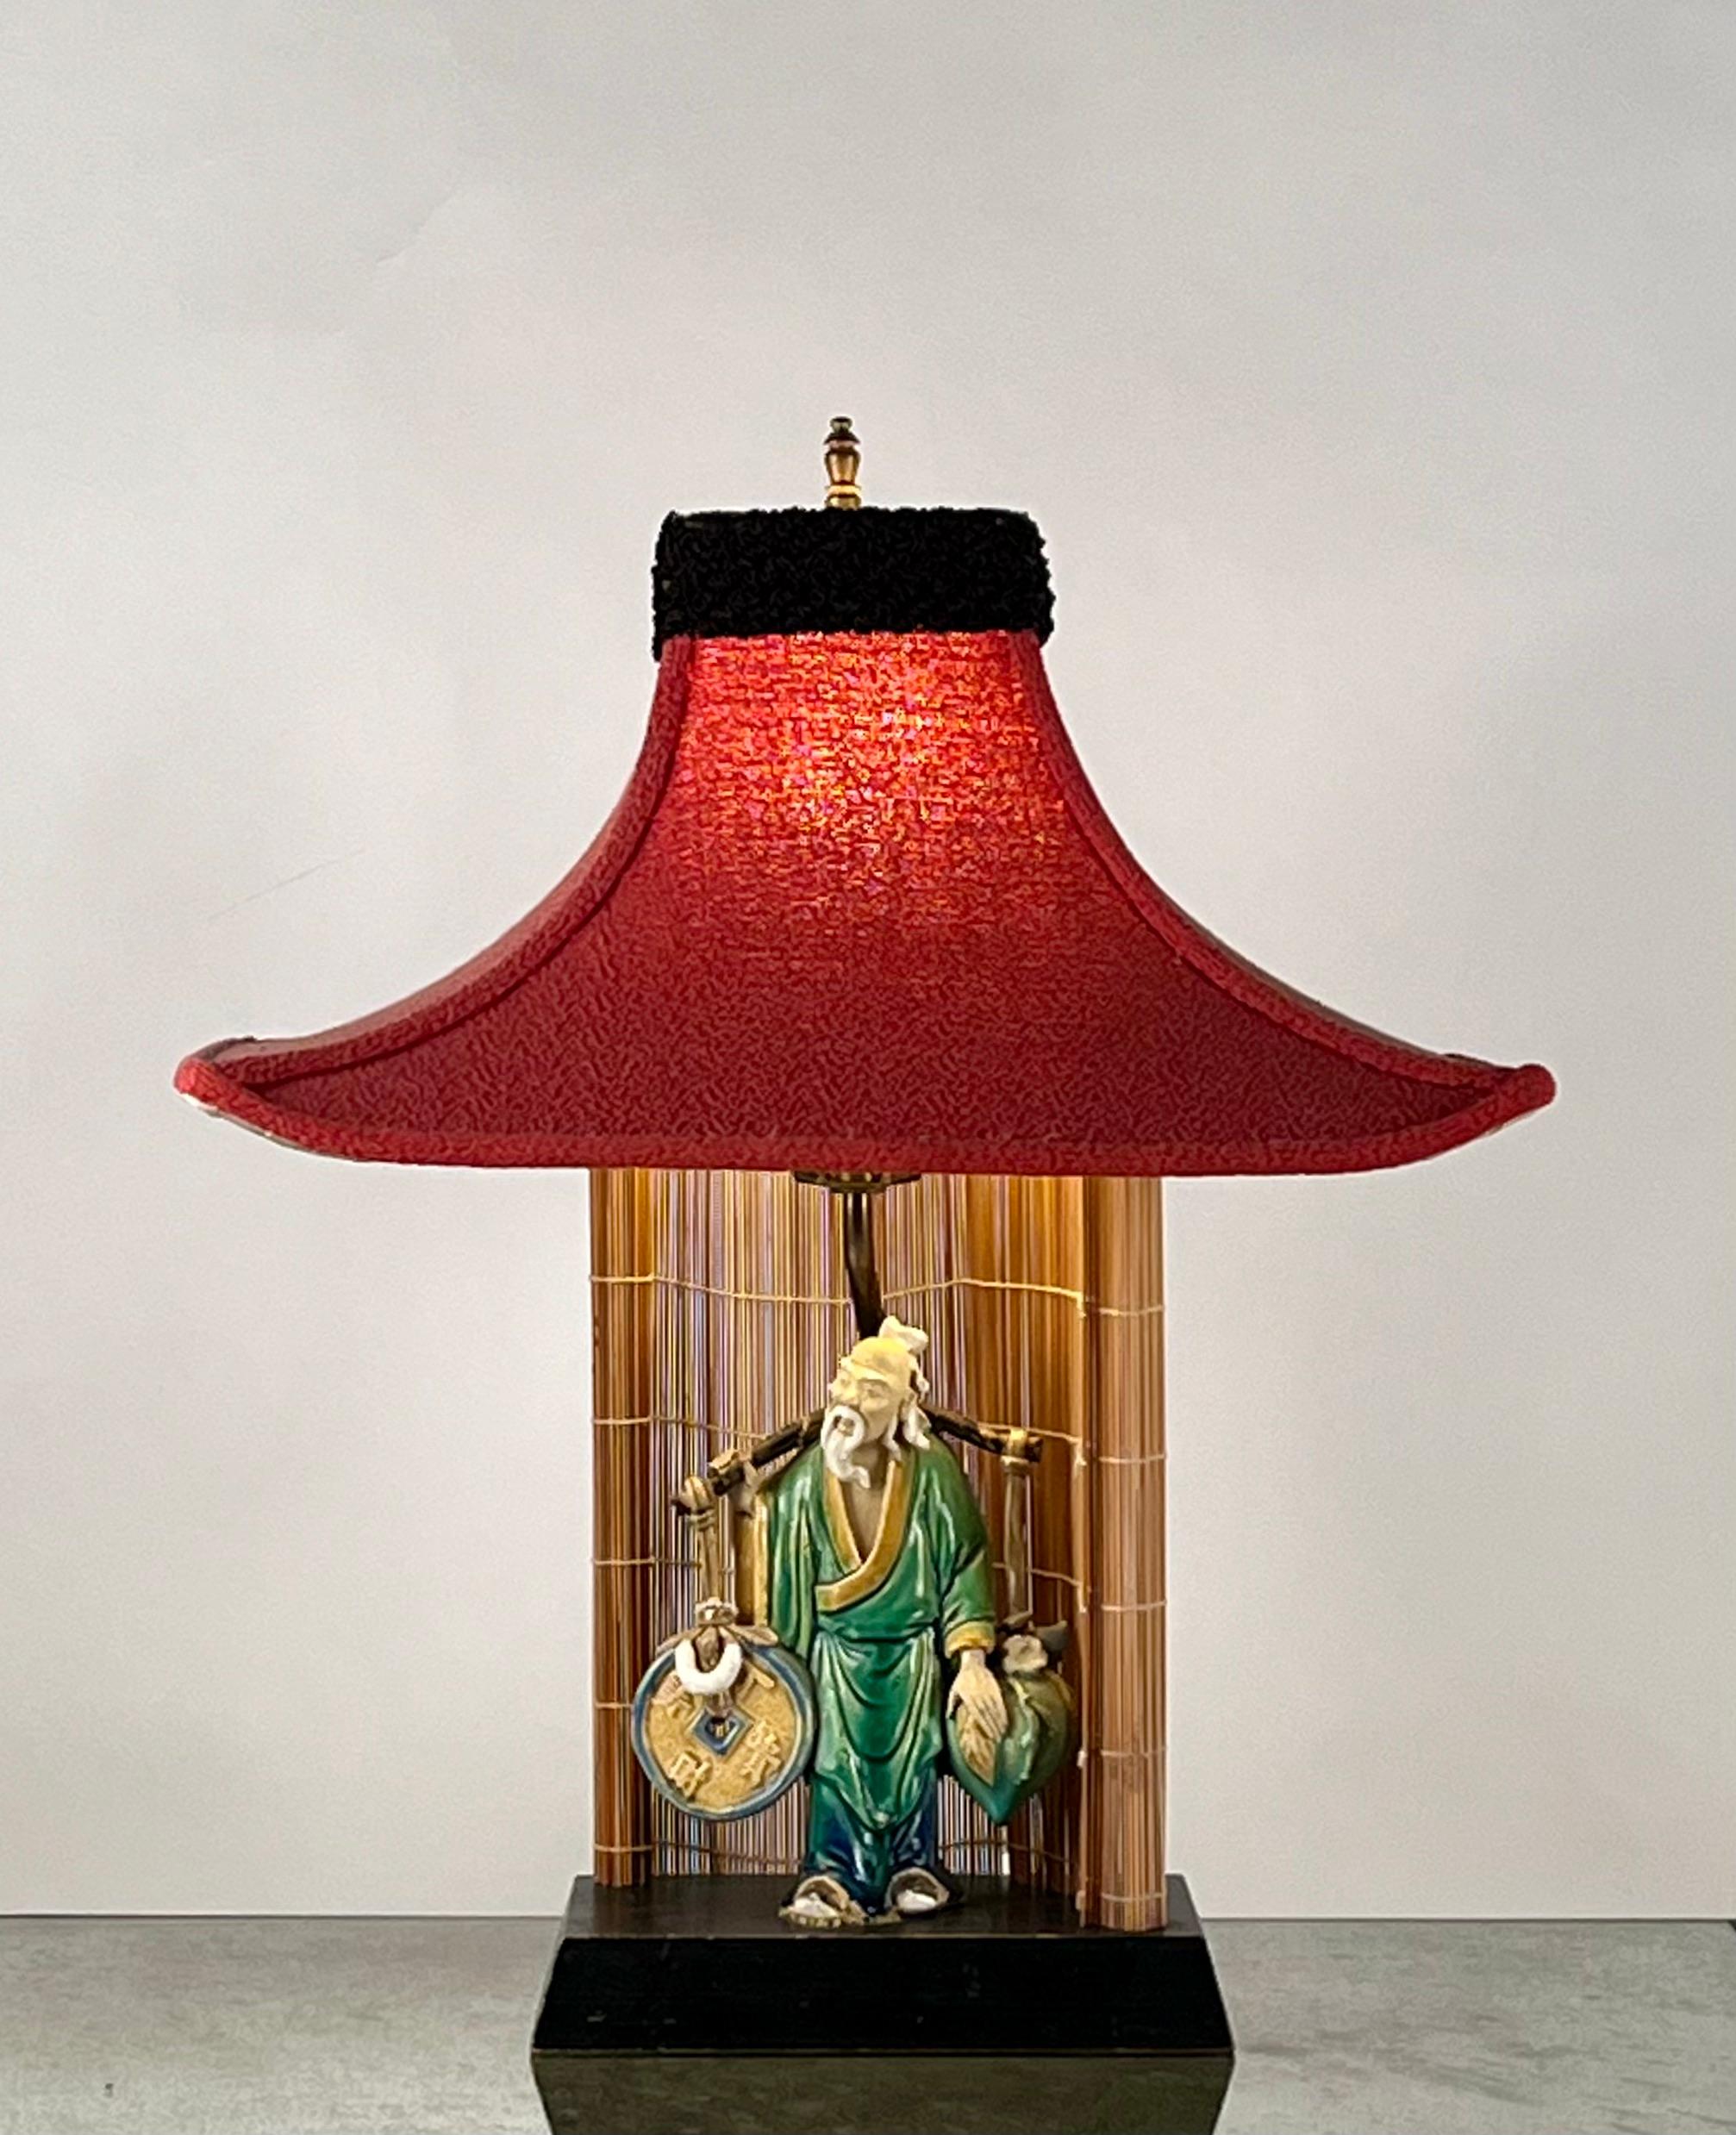 Whimsical Chinese figurine Midcentury ceramic lamp with original pagoda-shaped lampshade.